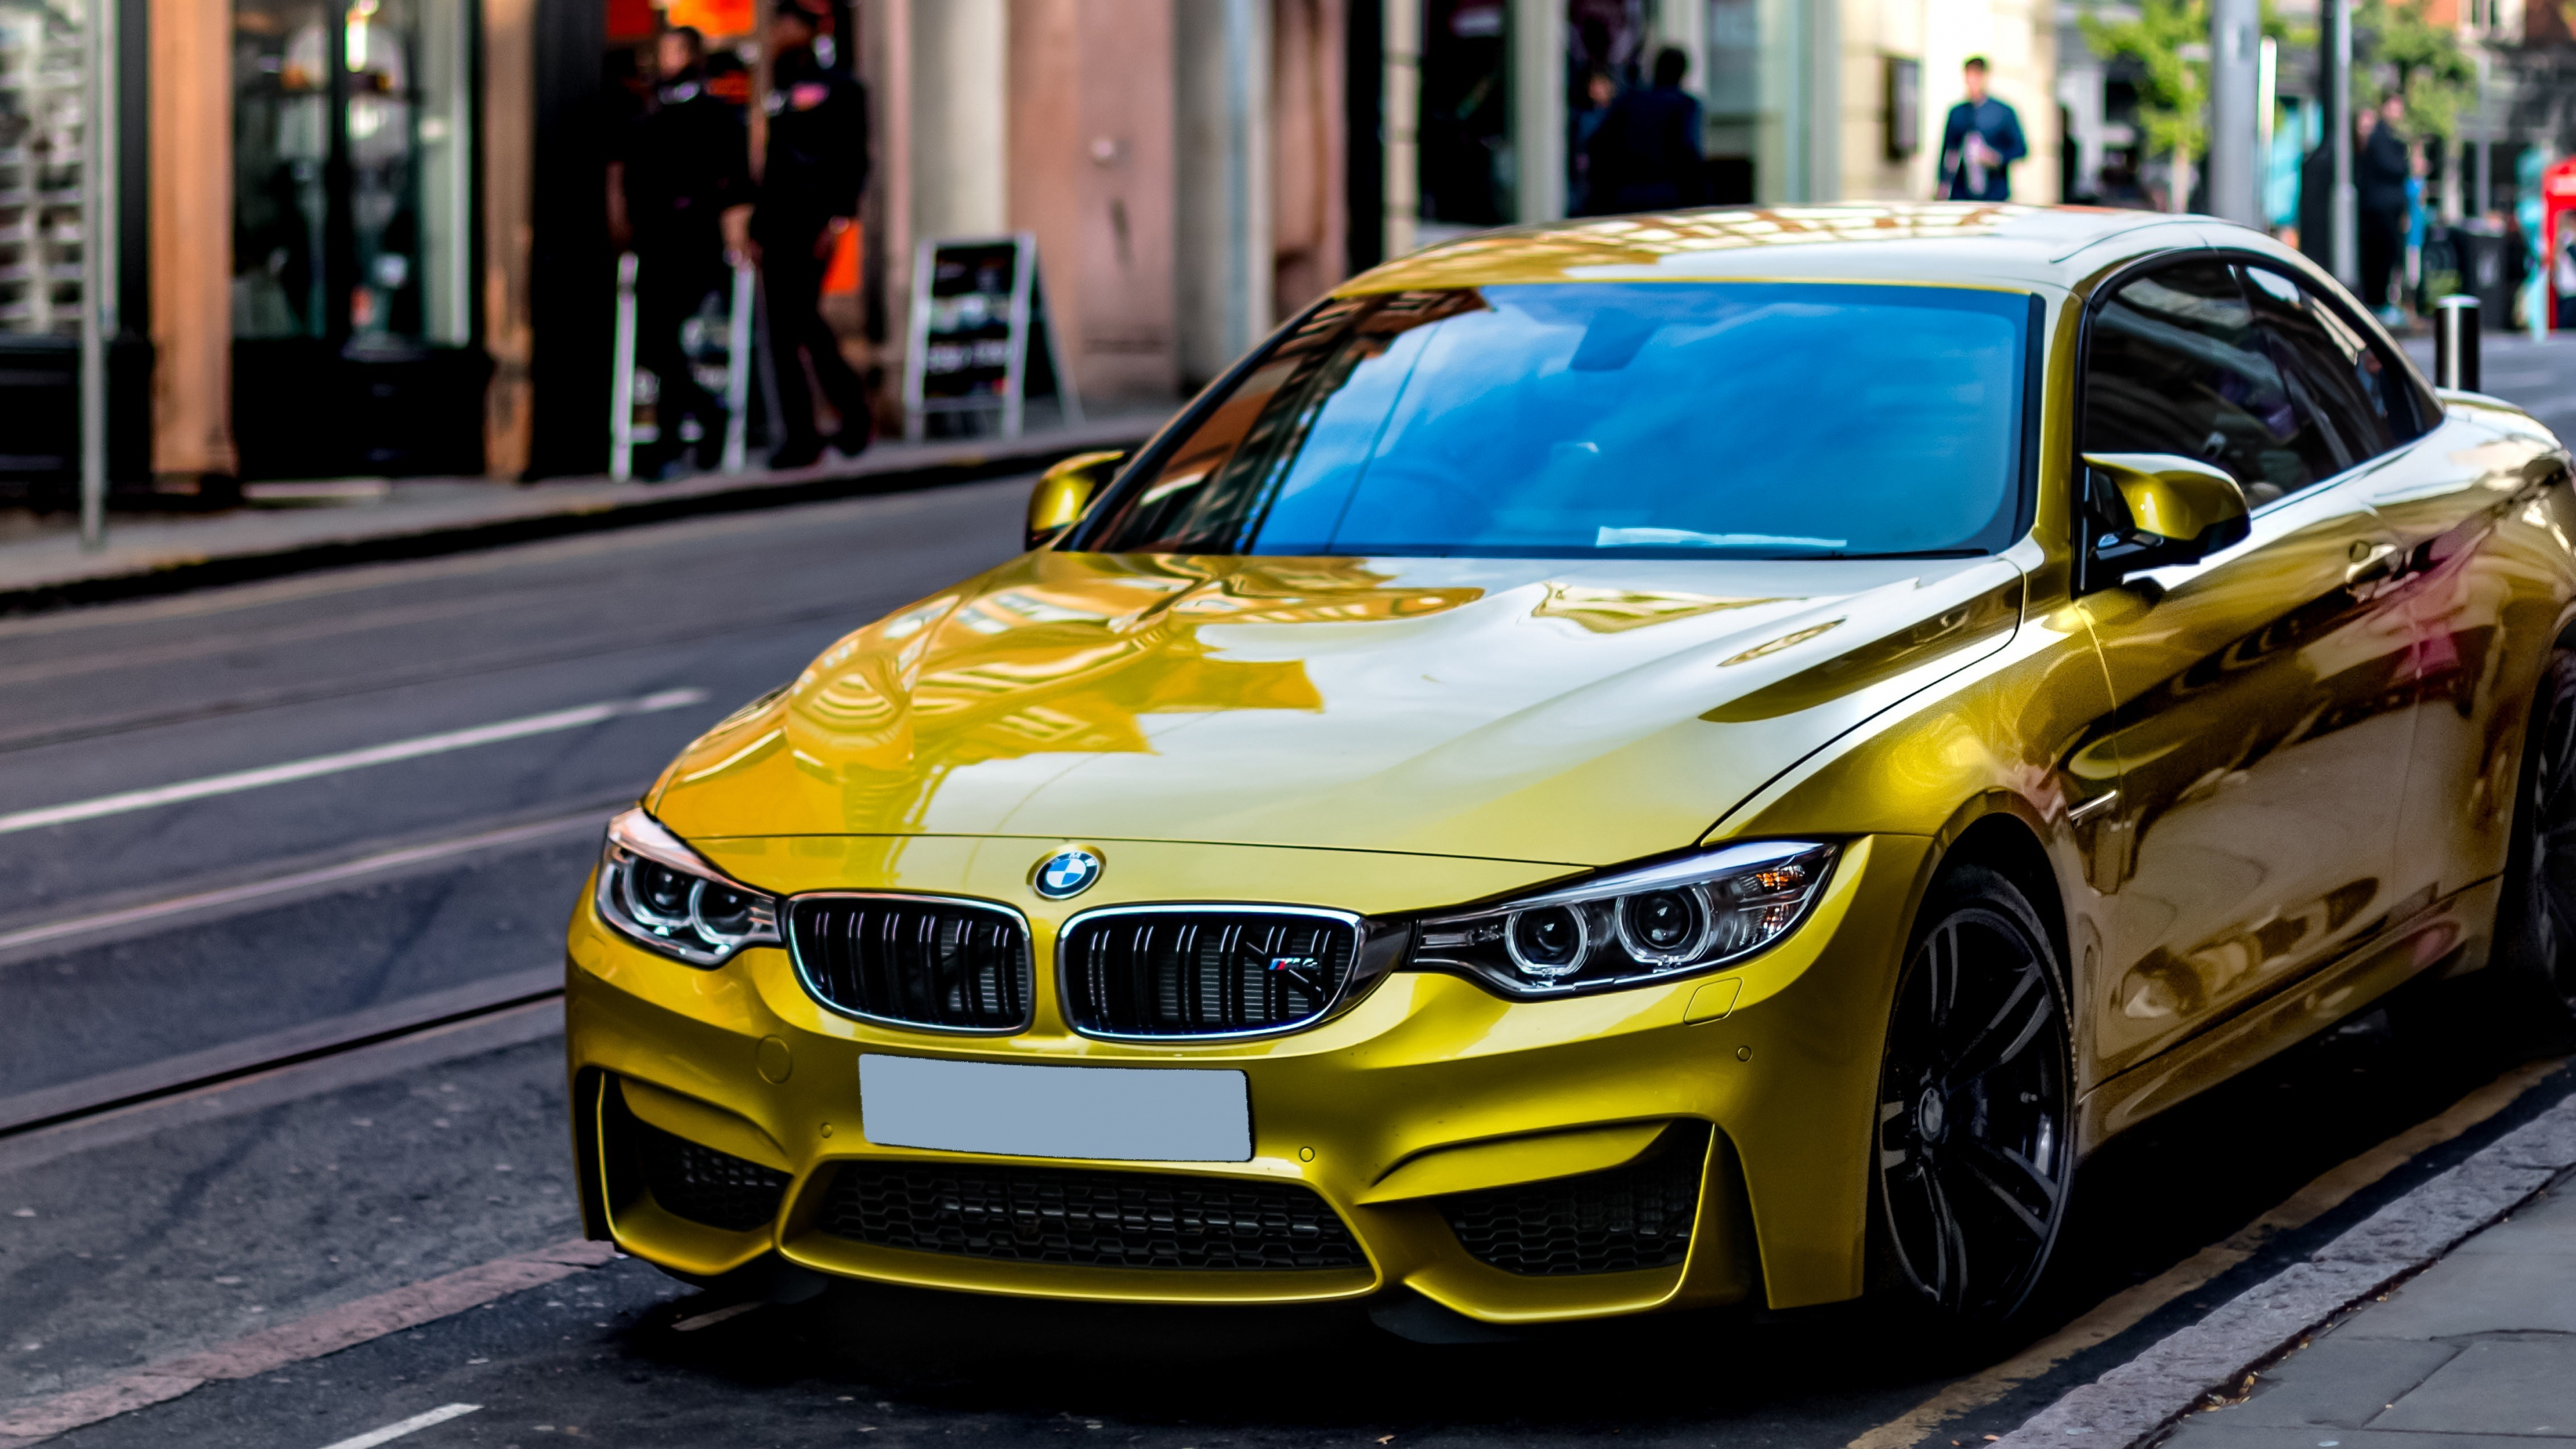 BMW M4, Luxurious car, 4K wallpaper, UHD, 3840x2160 4K Desktop